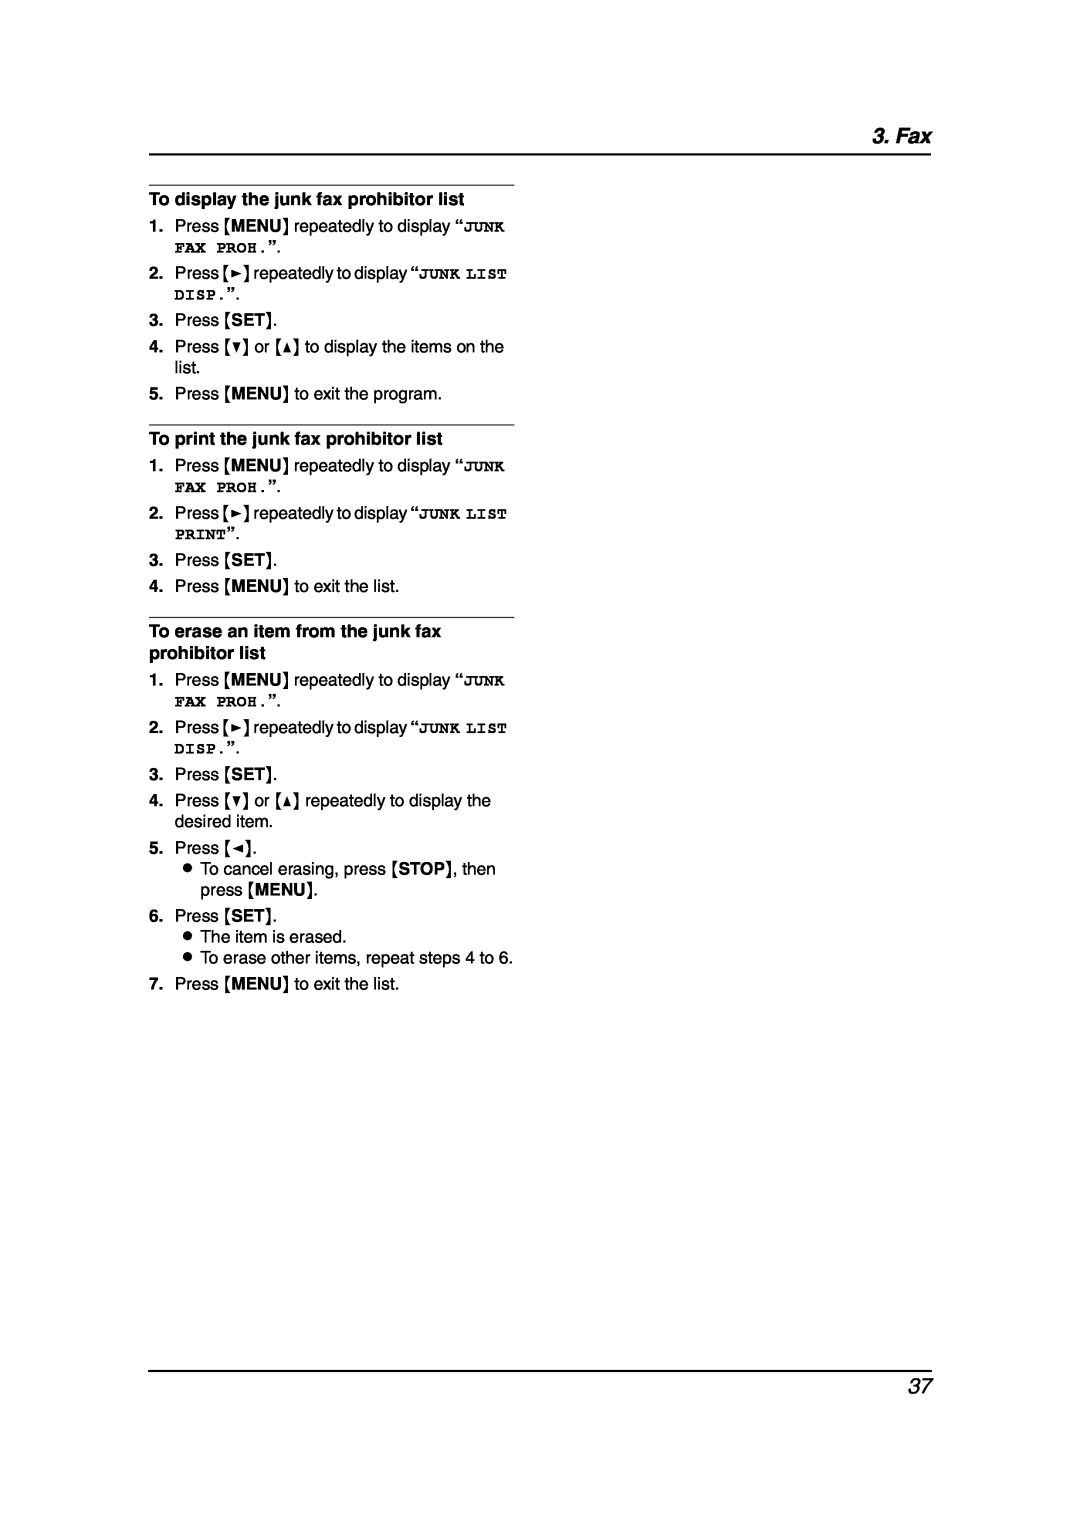 Panasonic KX-FLB851 manual To display the junk fax prohibitor list, To print the junk fax prohibitor list, Fax 